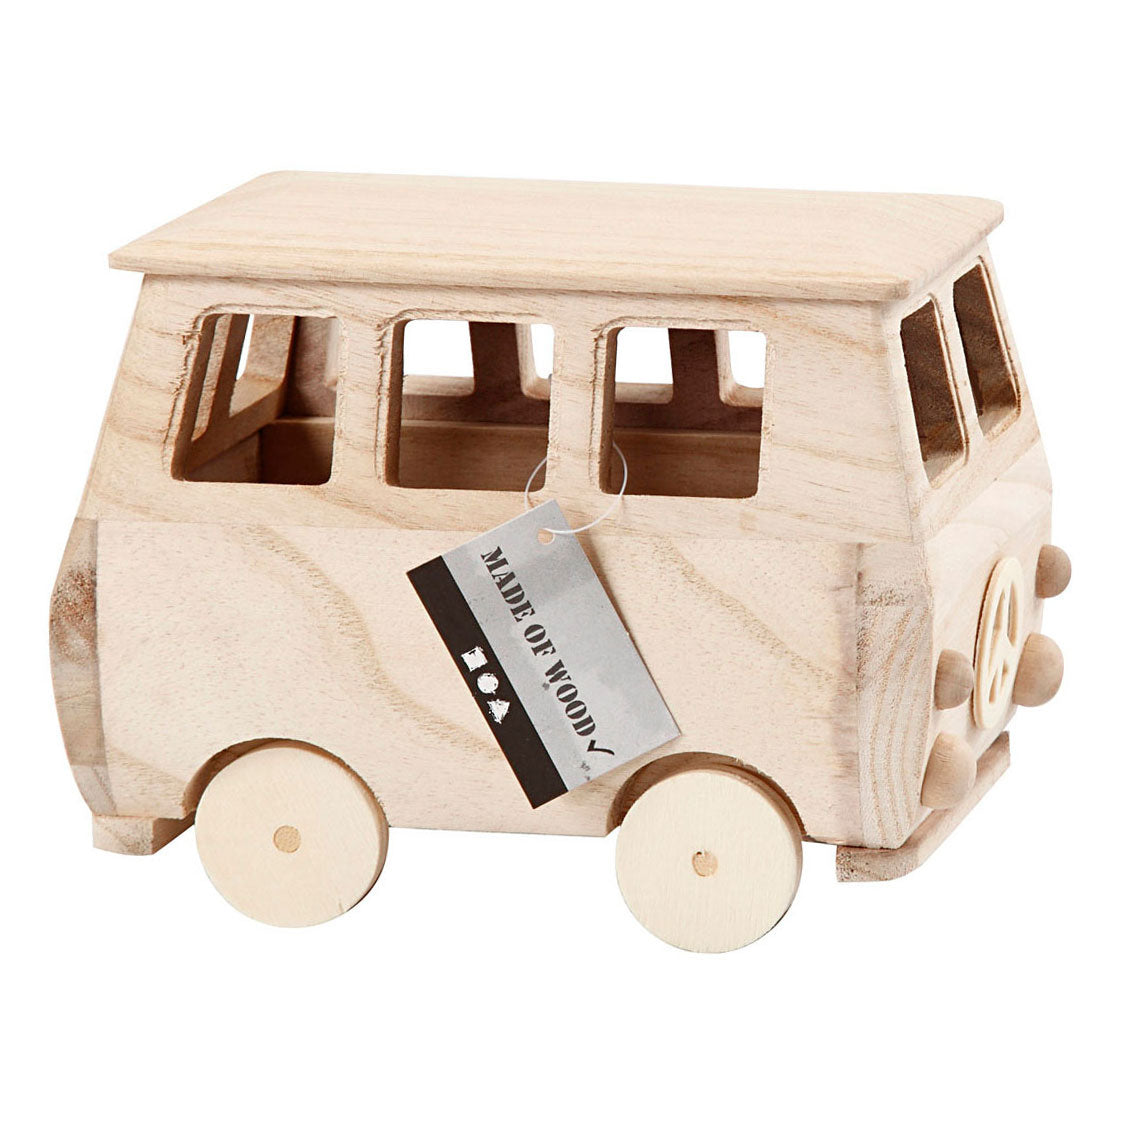 Creativ Company Minibús de madera, 17x10x13cm